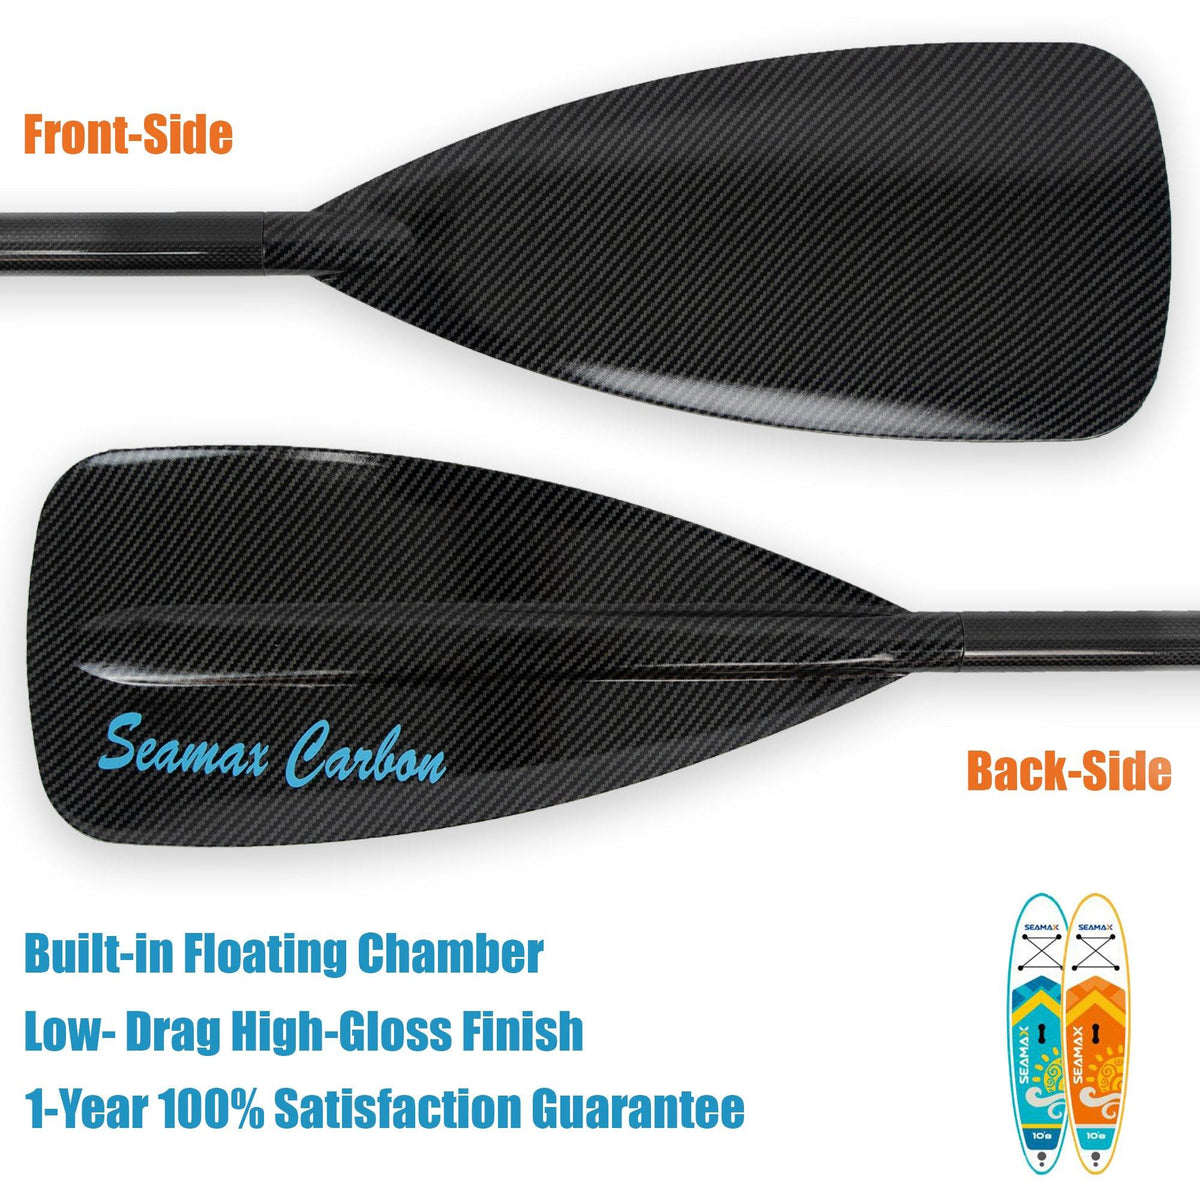 SUP Paddle Adjustable Rigid - Marine Shaft Fibergl and Aluminum 3-Sections Seamax with